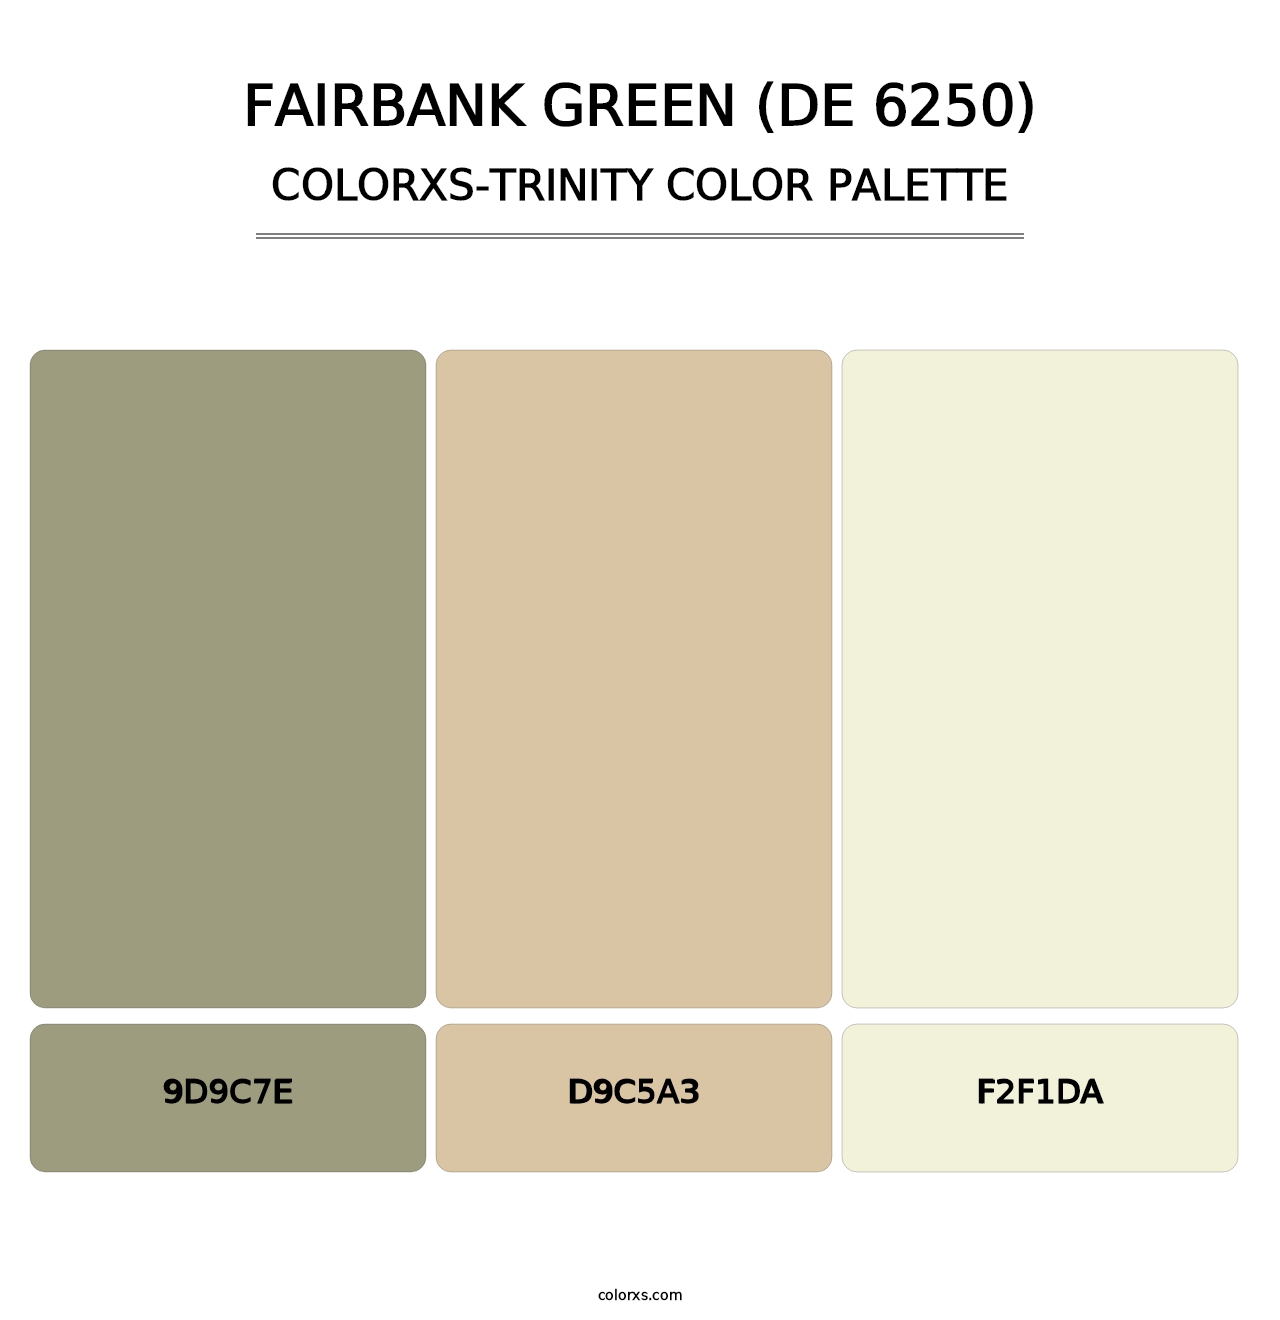 Fairbank Green (DE 6250) - Colorxs Trinity Palette